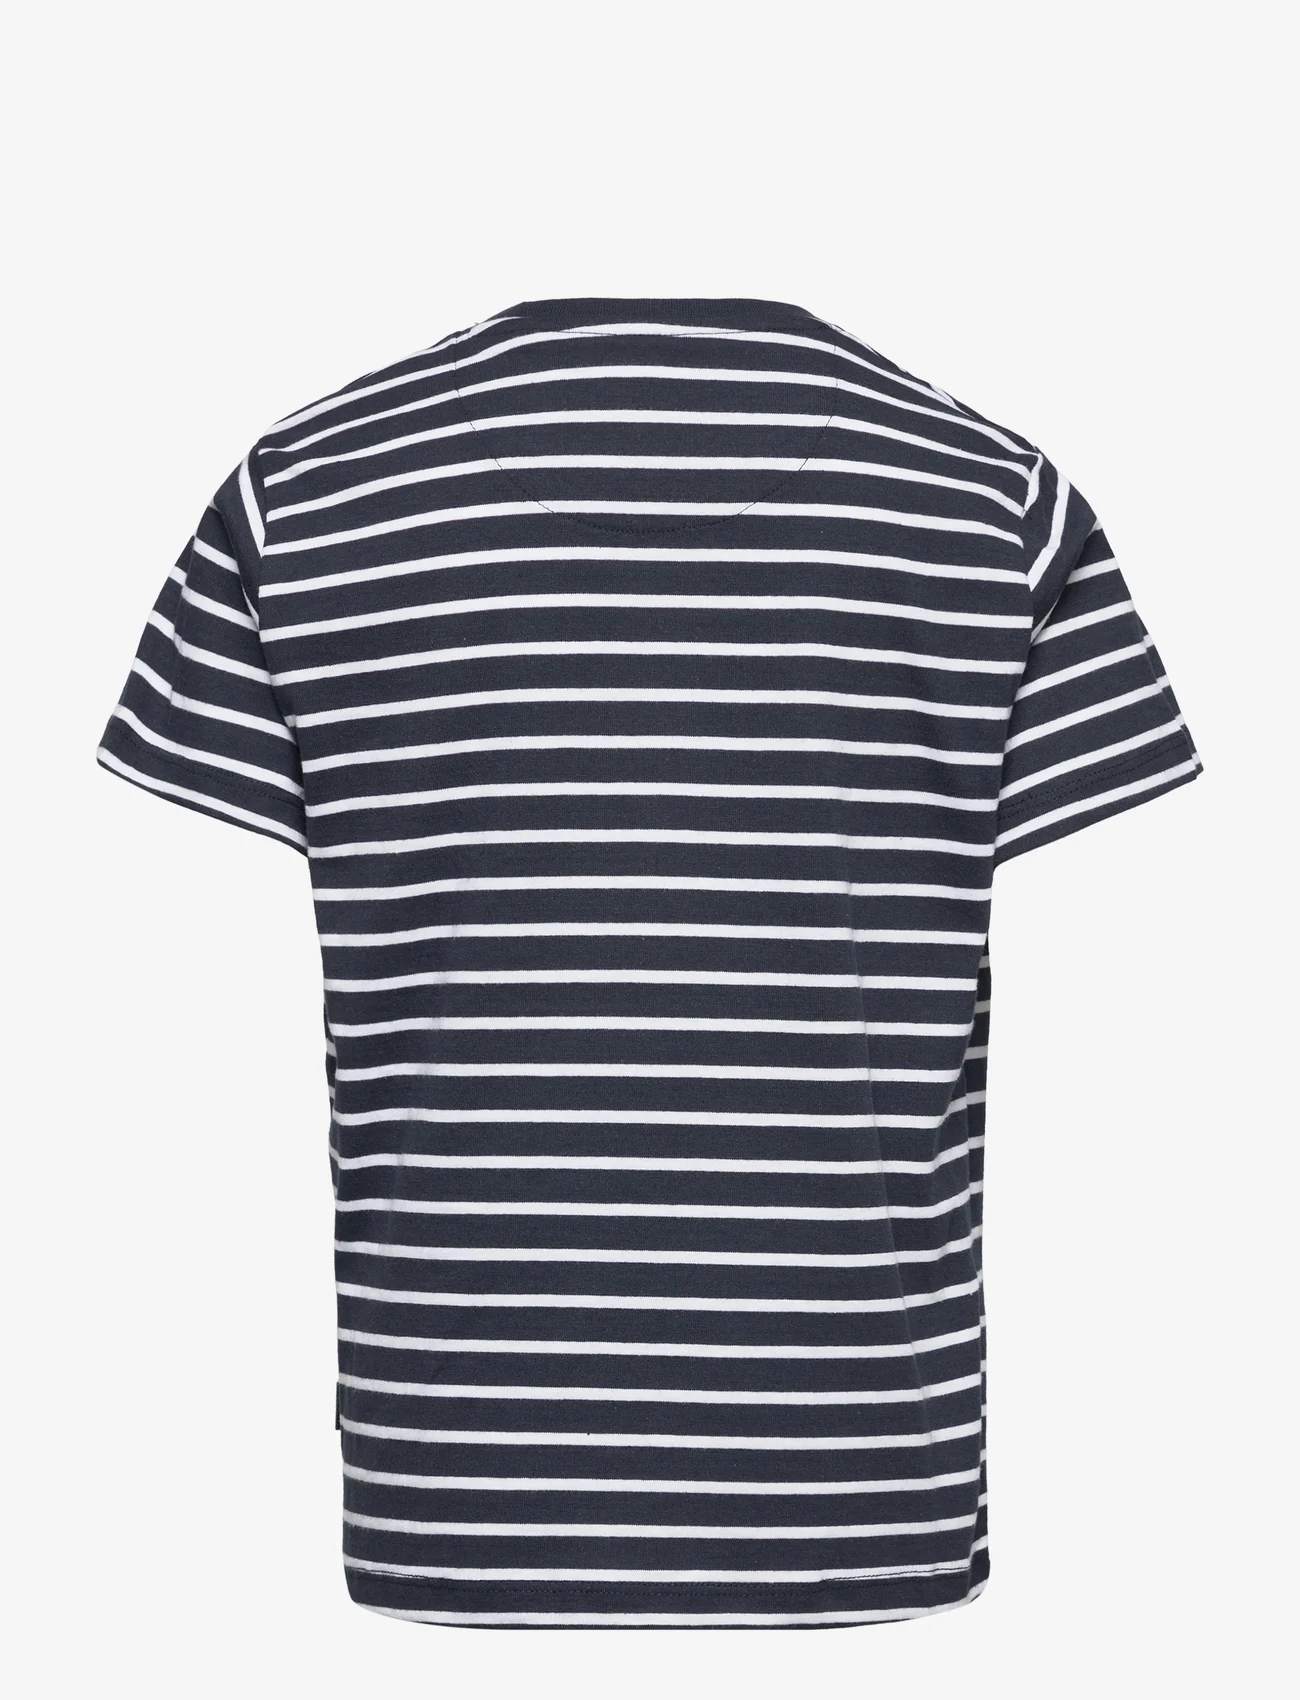 Kronstadt - Timmi Kids Organic/Recycled striped t-shirt - ar īsām piedurknēm - navy / white - 1